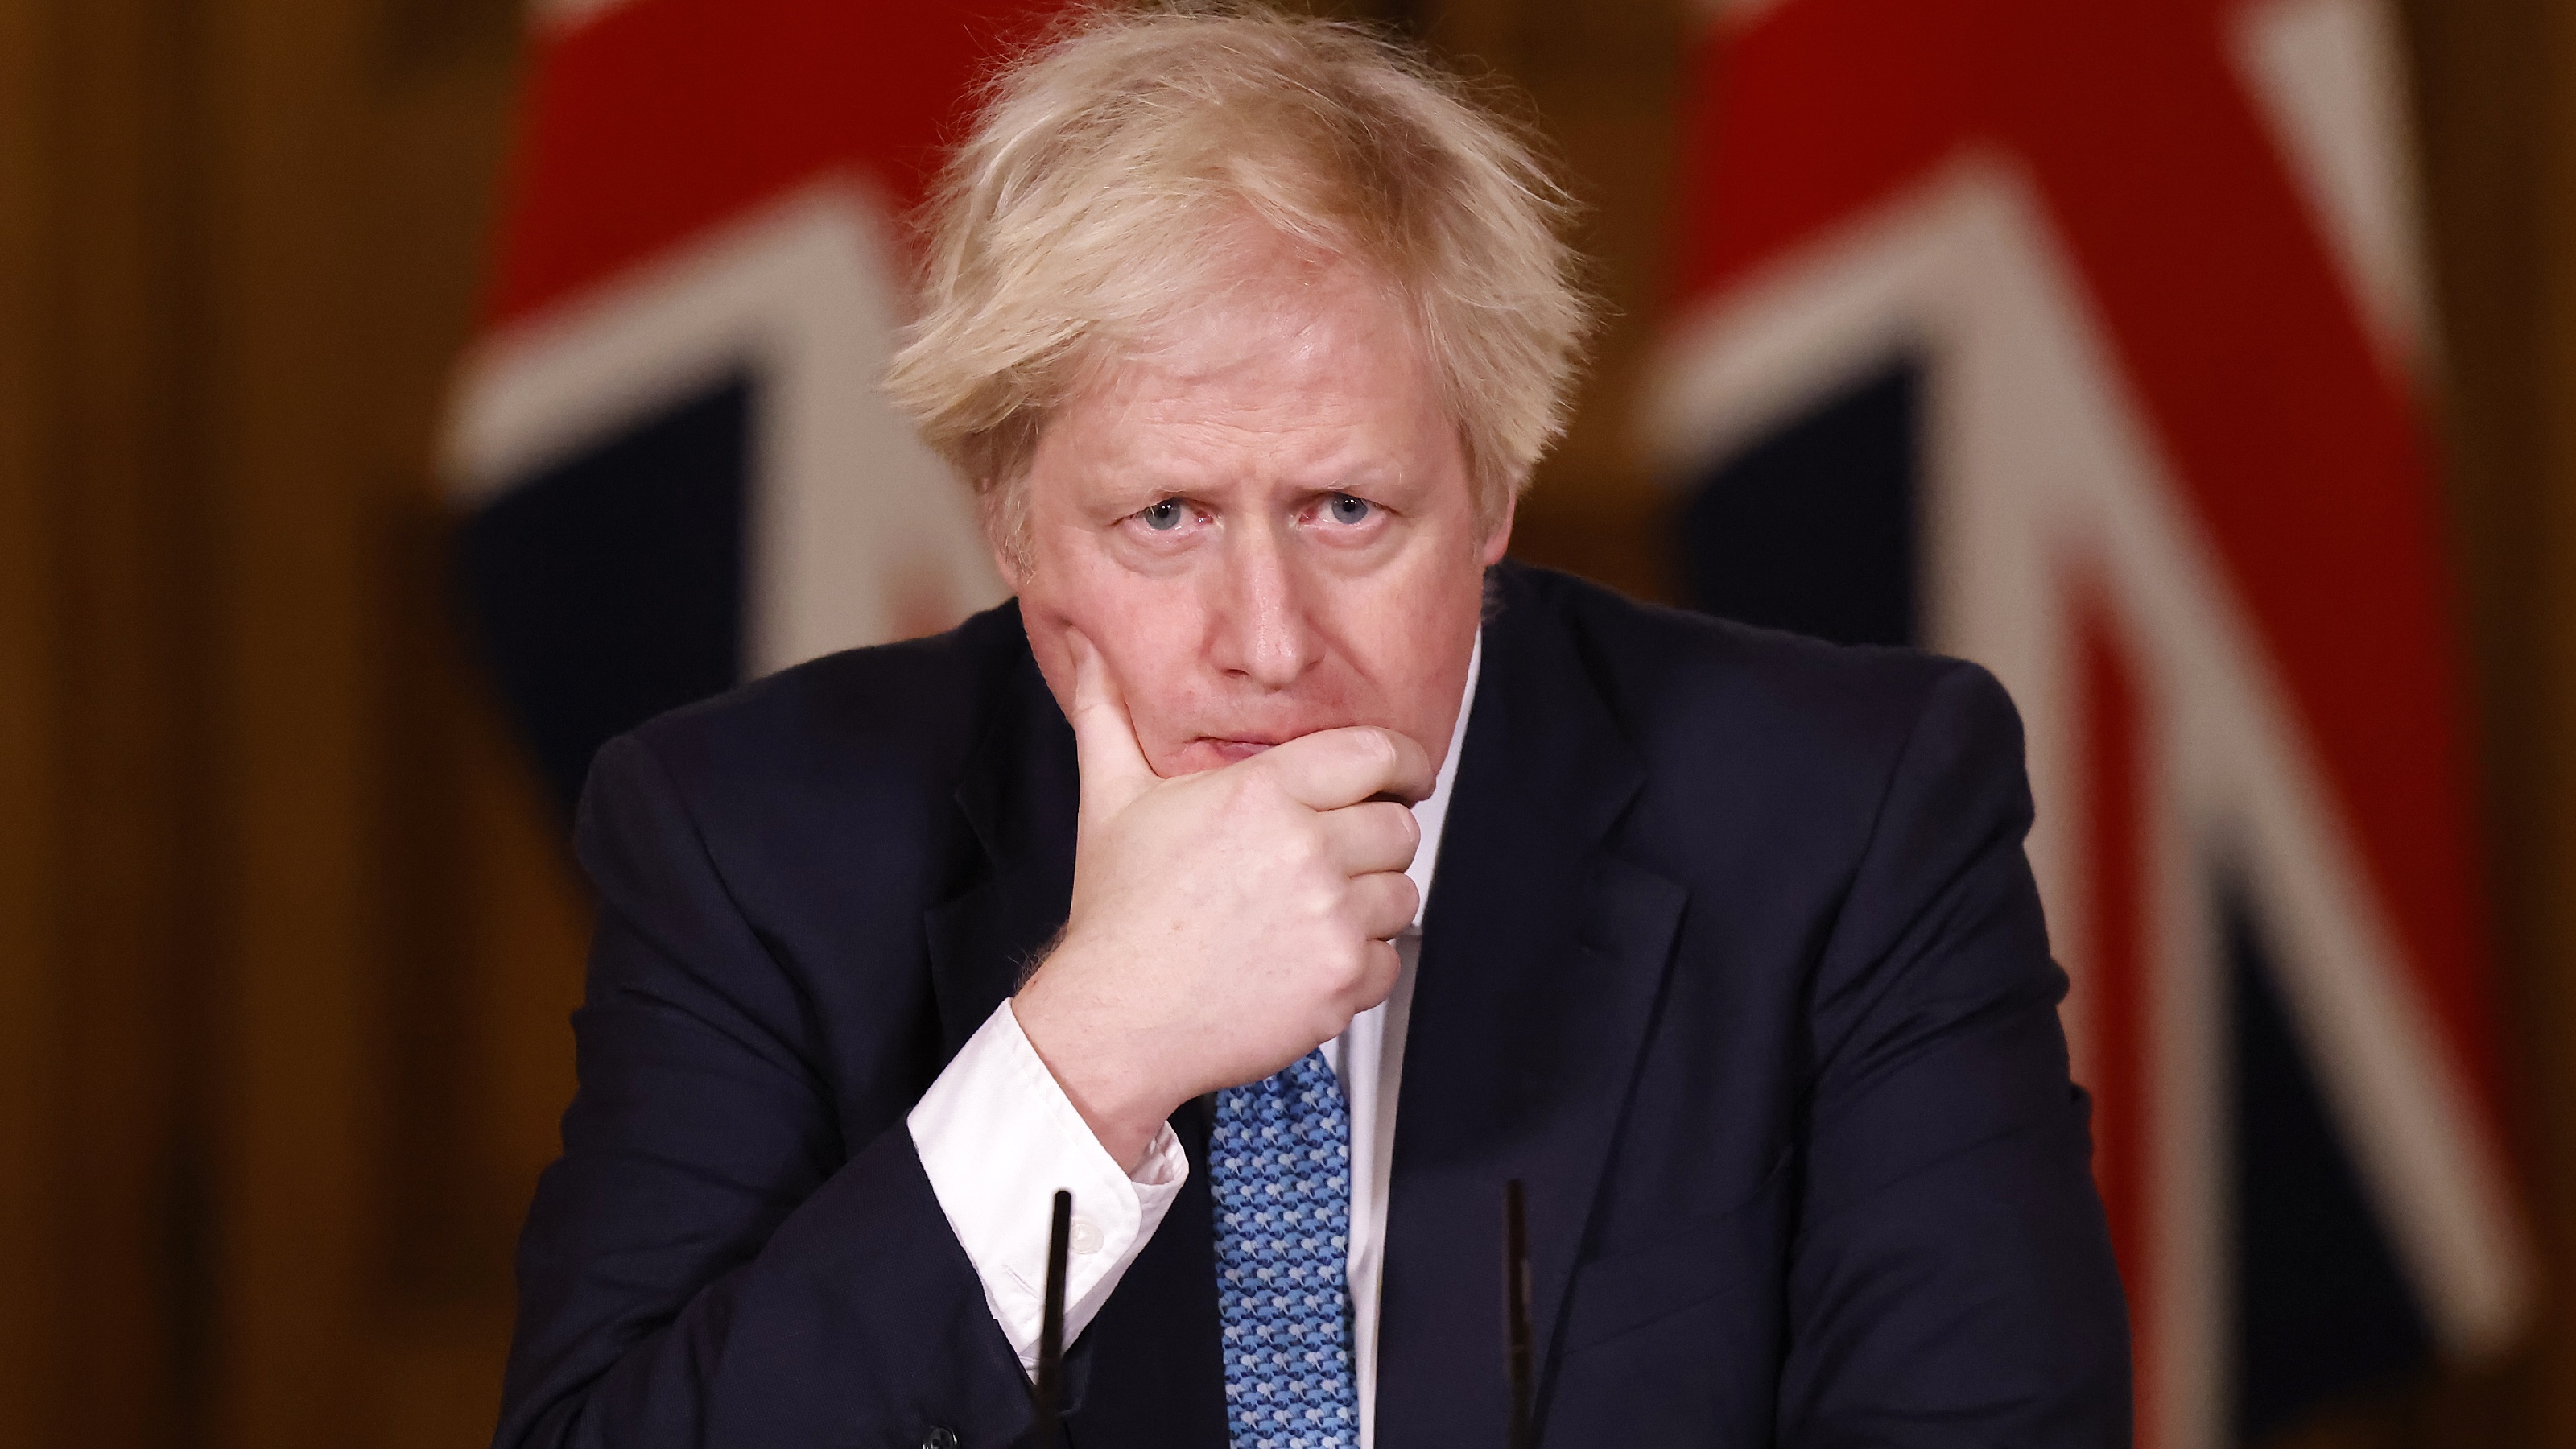 Boris Johnson speaks during a virtual press conference at No.10